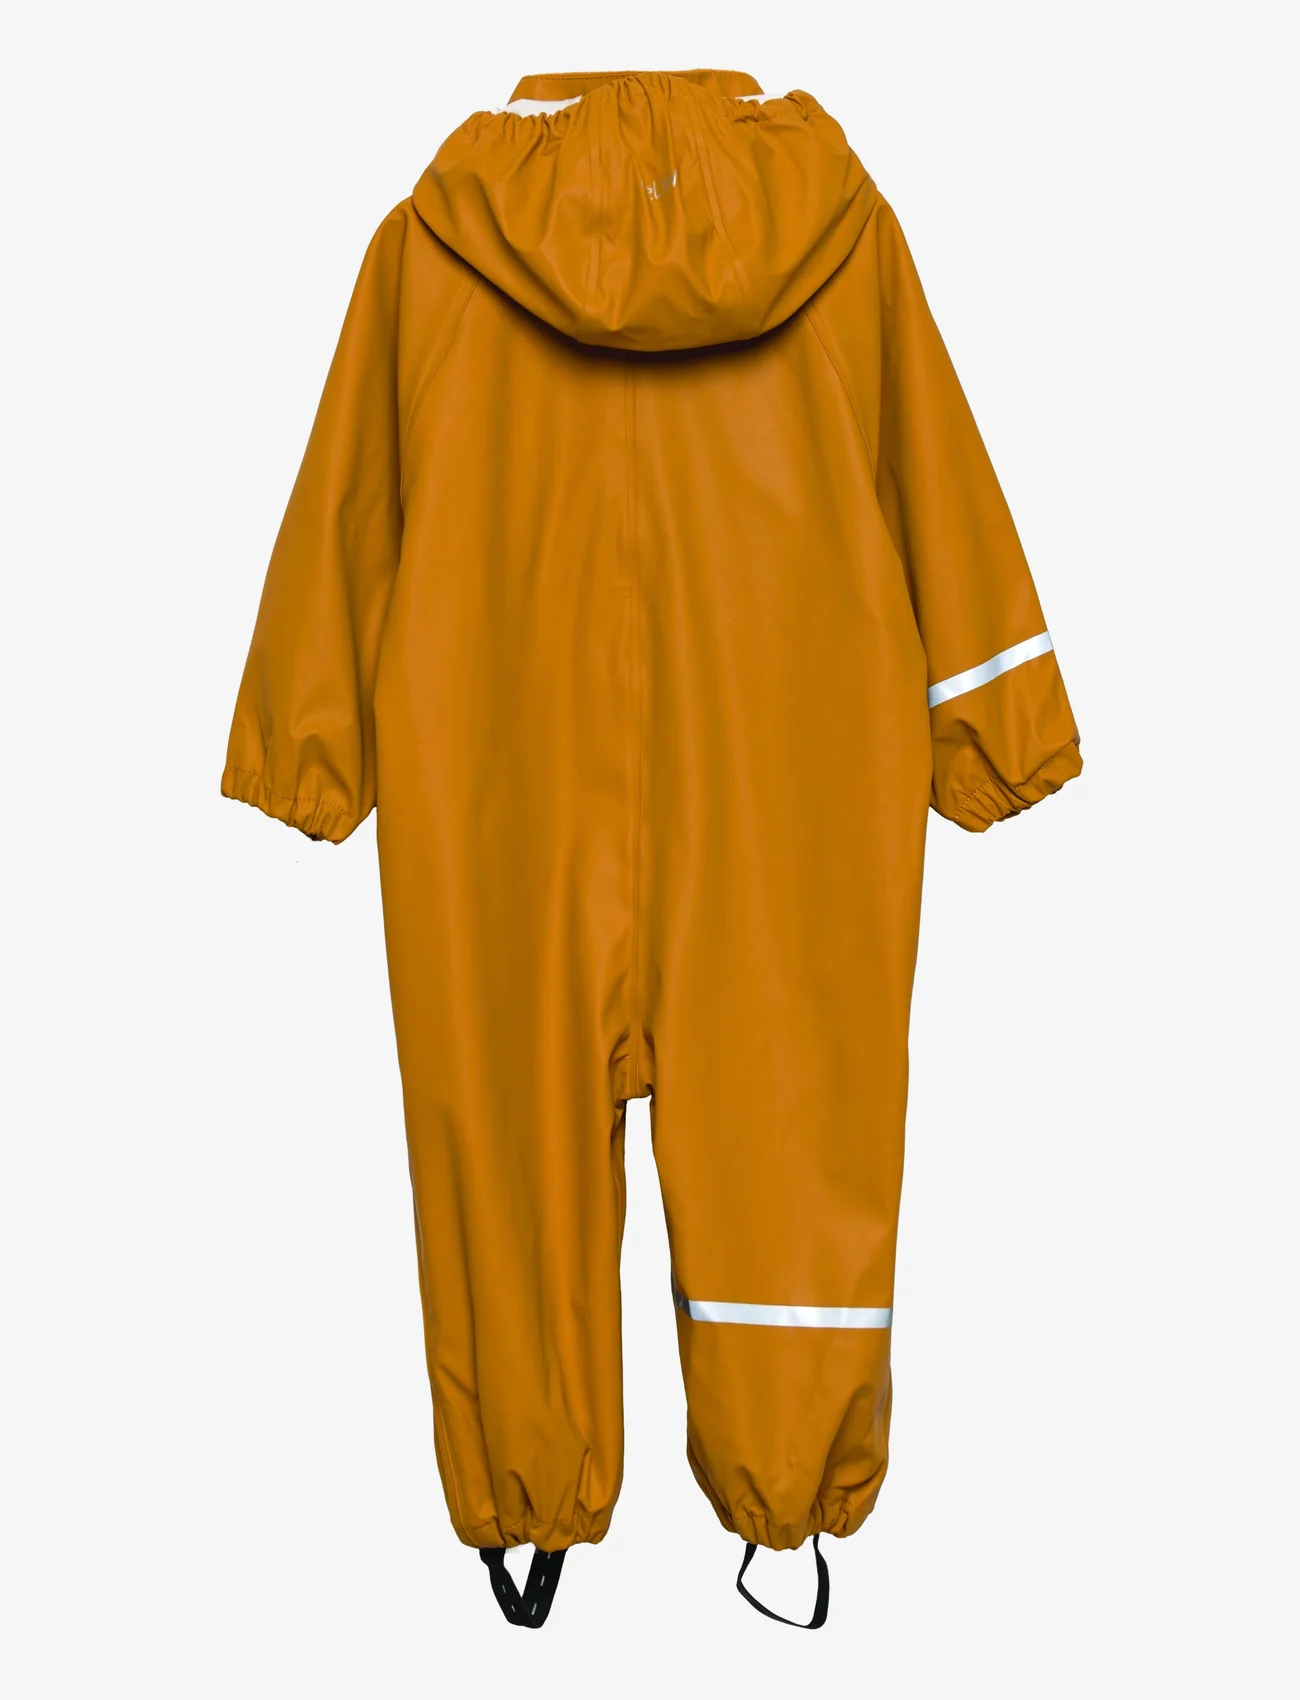 CeLaVi - Rainwear suit -Solid PU - lietus valkā kombinezoni - buckthorn brown - 1